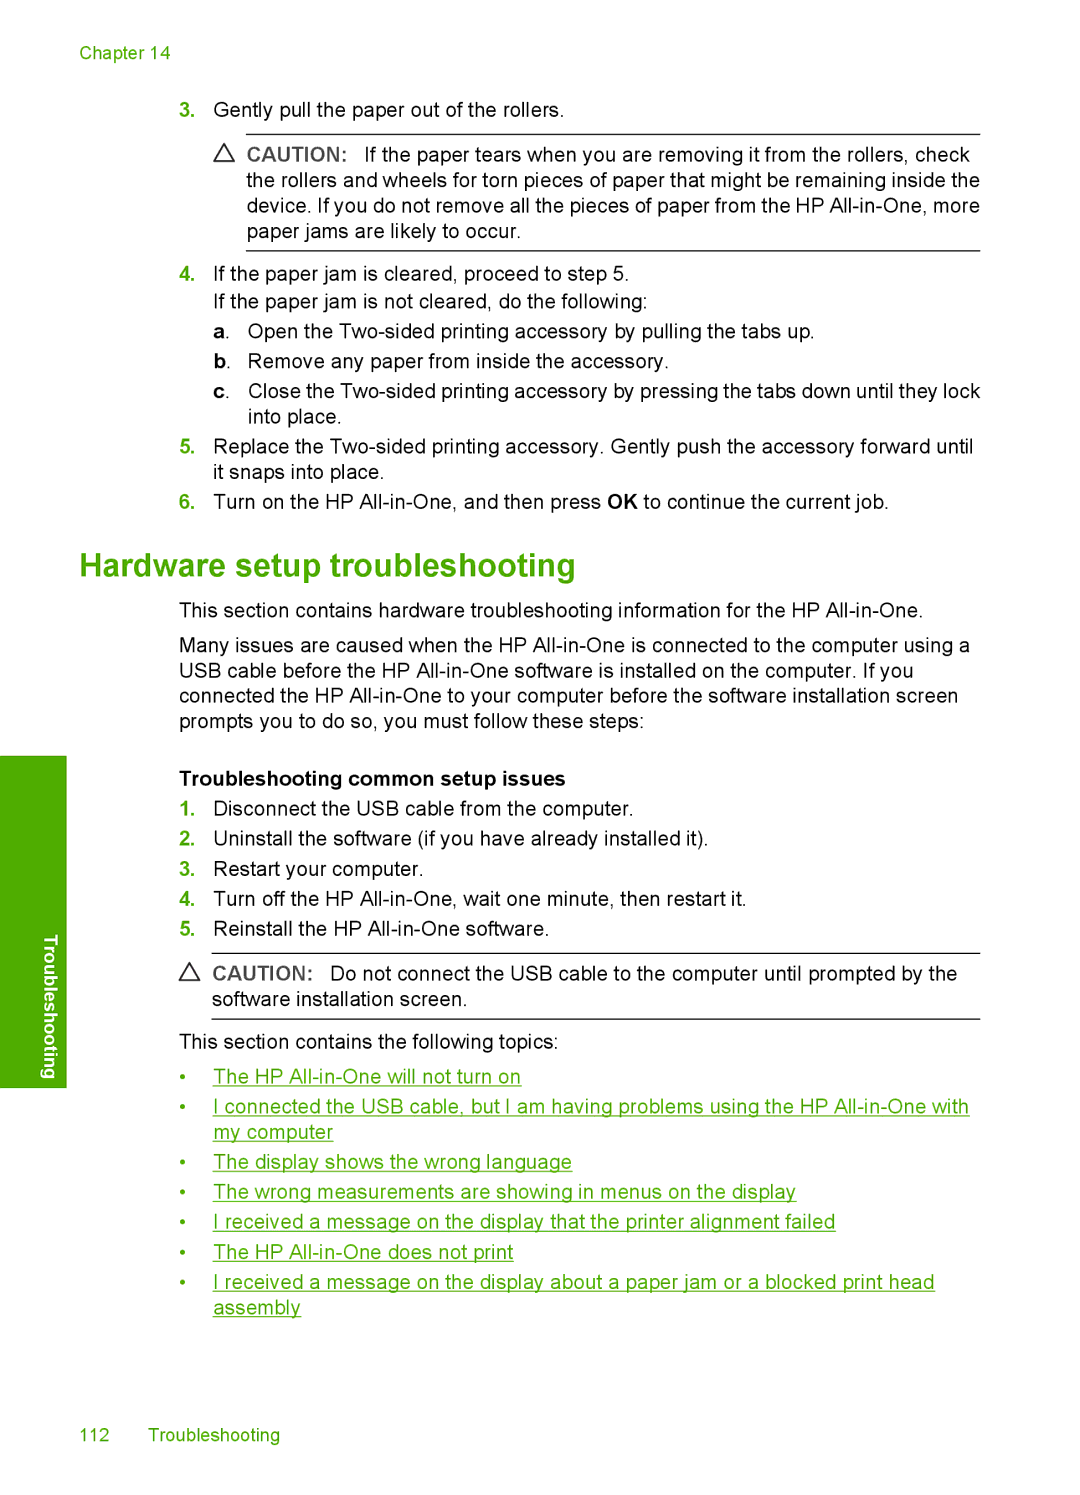 HP C6200 manual Hardware setup troubleshooting, Troubleshooting common setup issues 